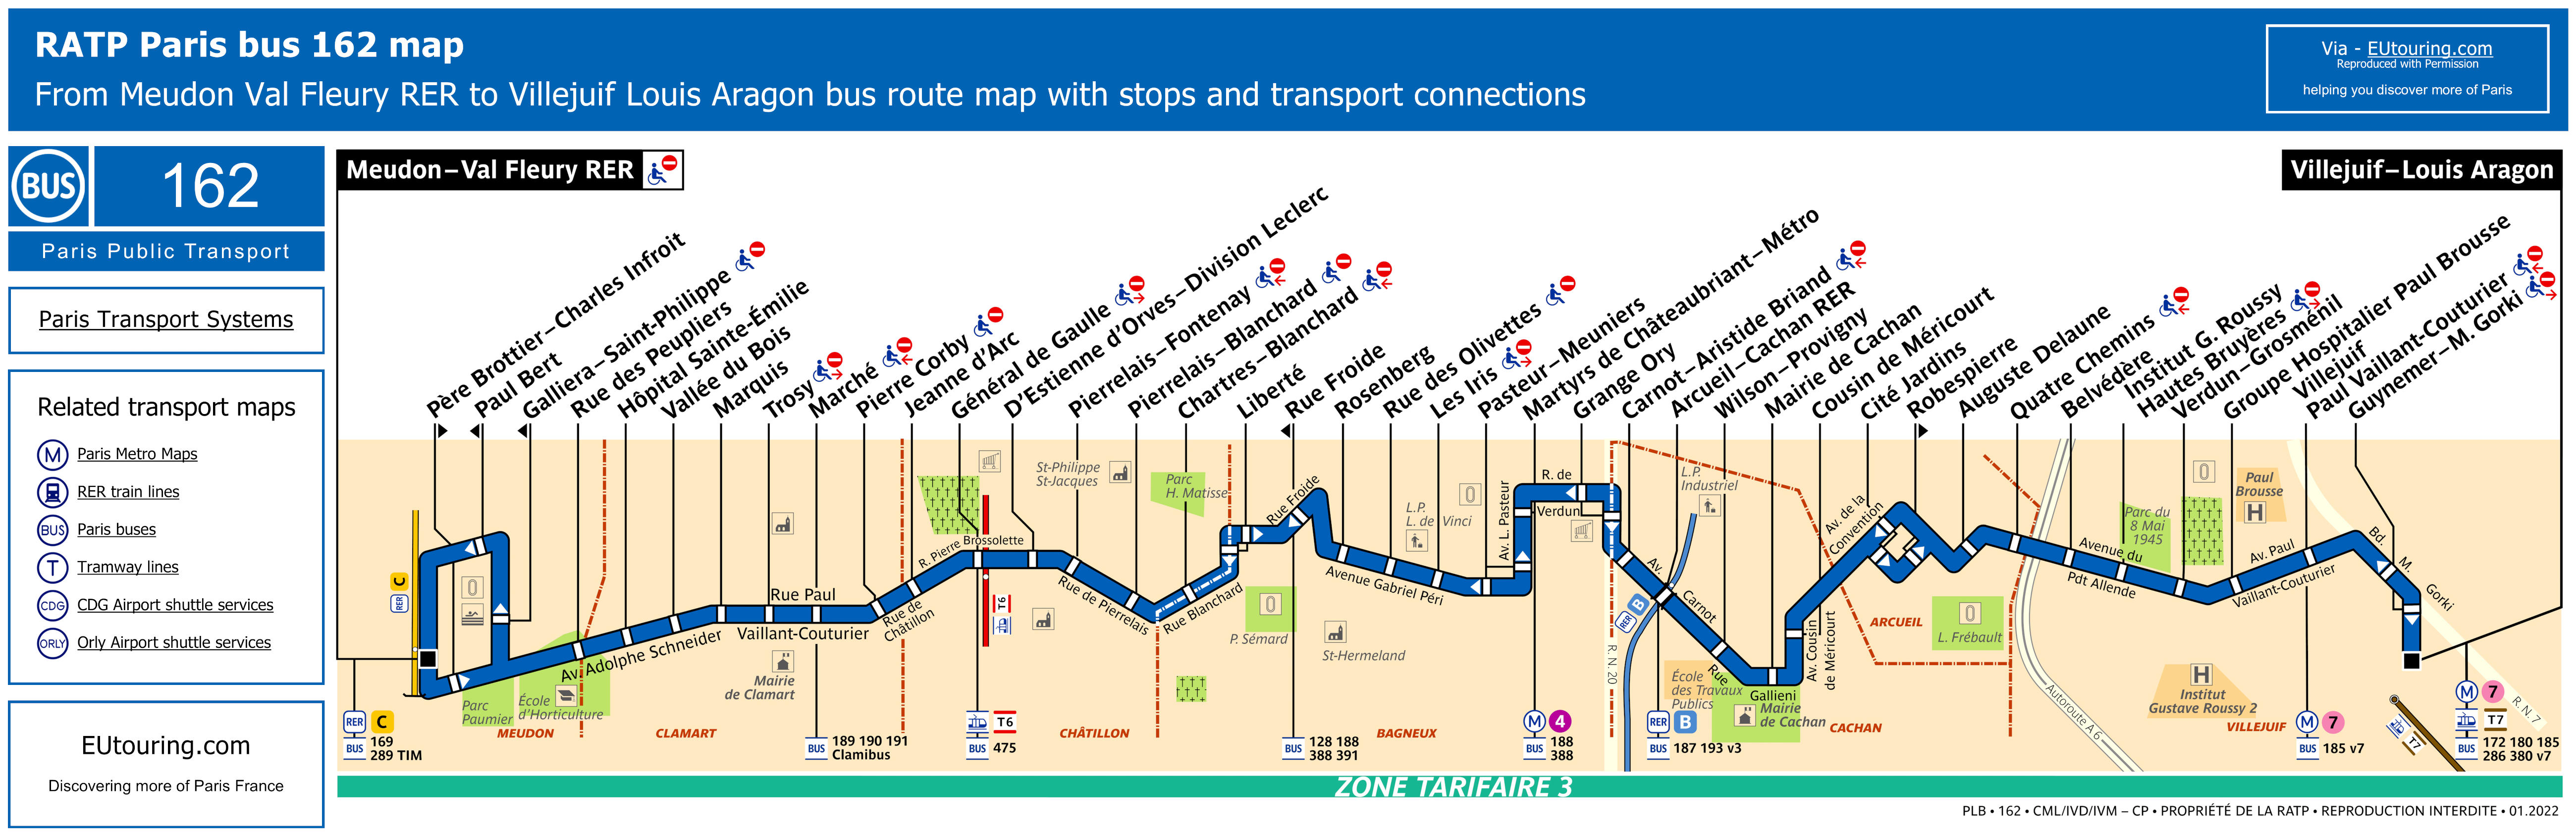 ratp route maps for paris bus lines 160 through to 169